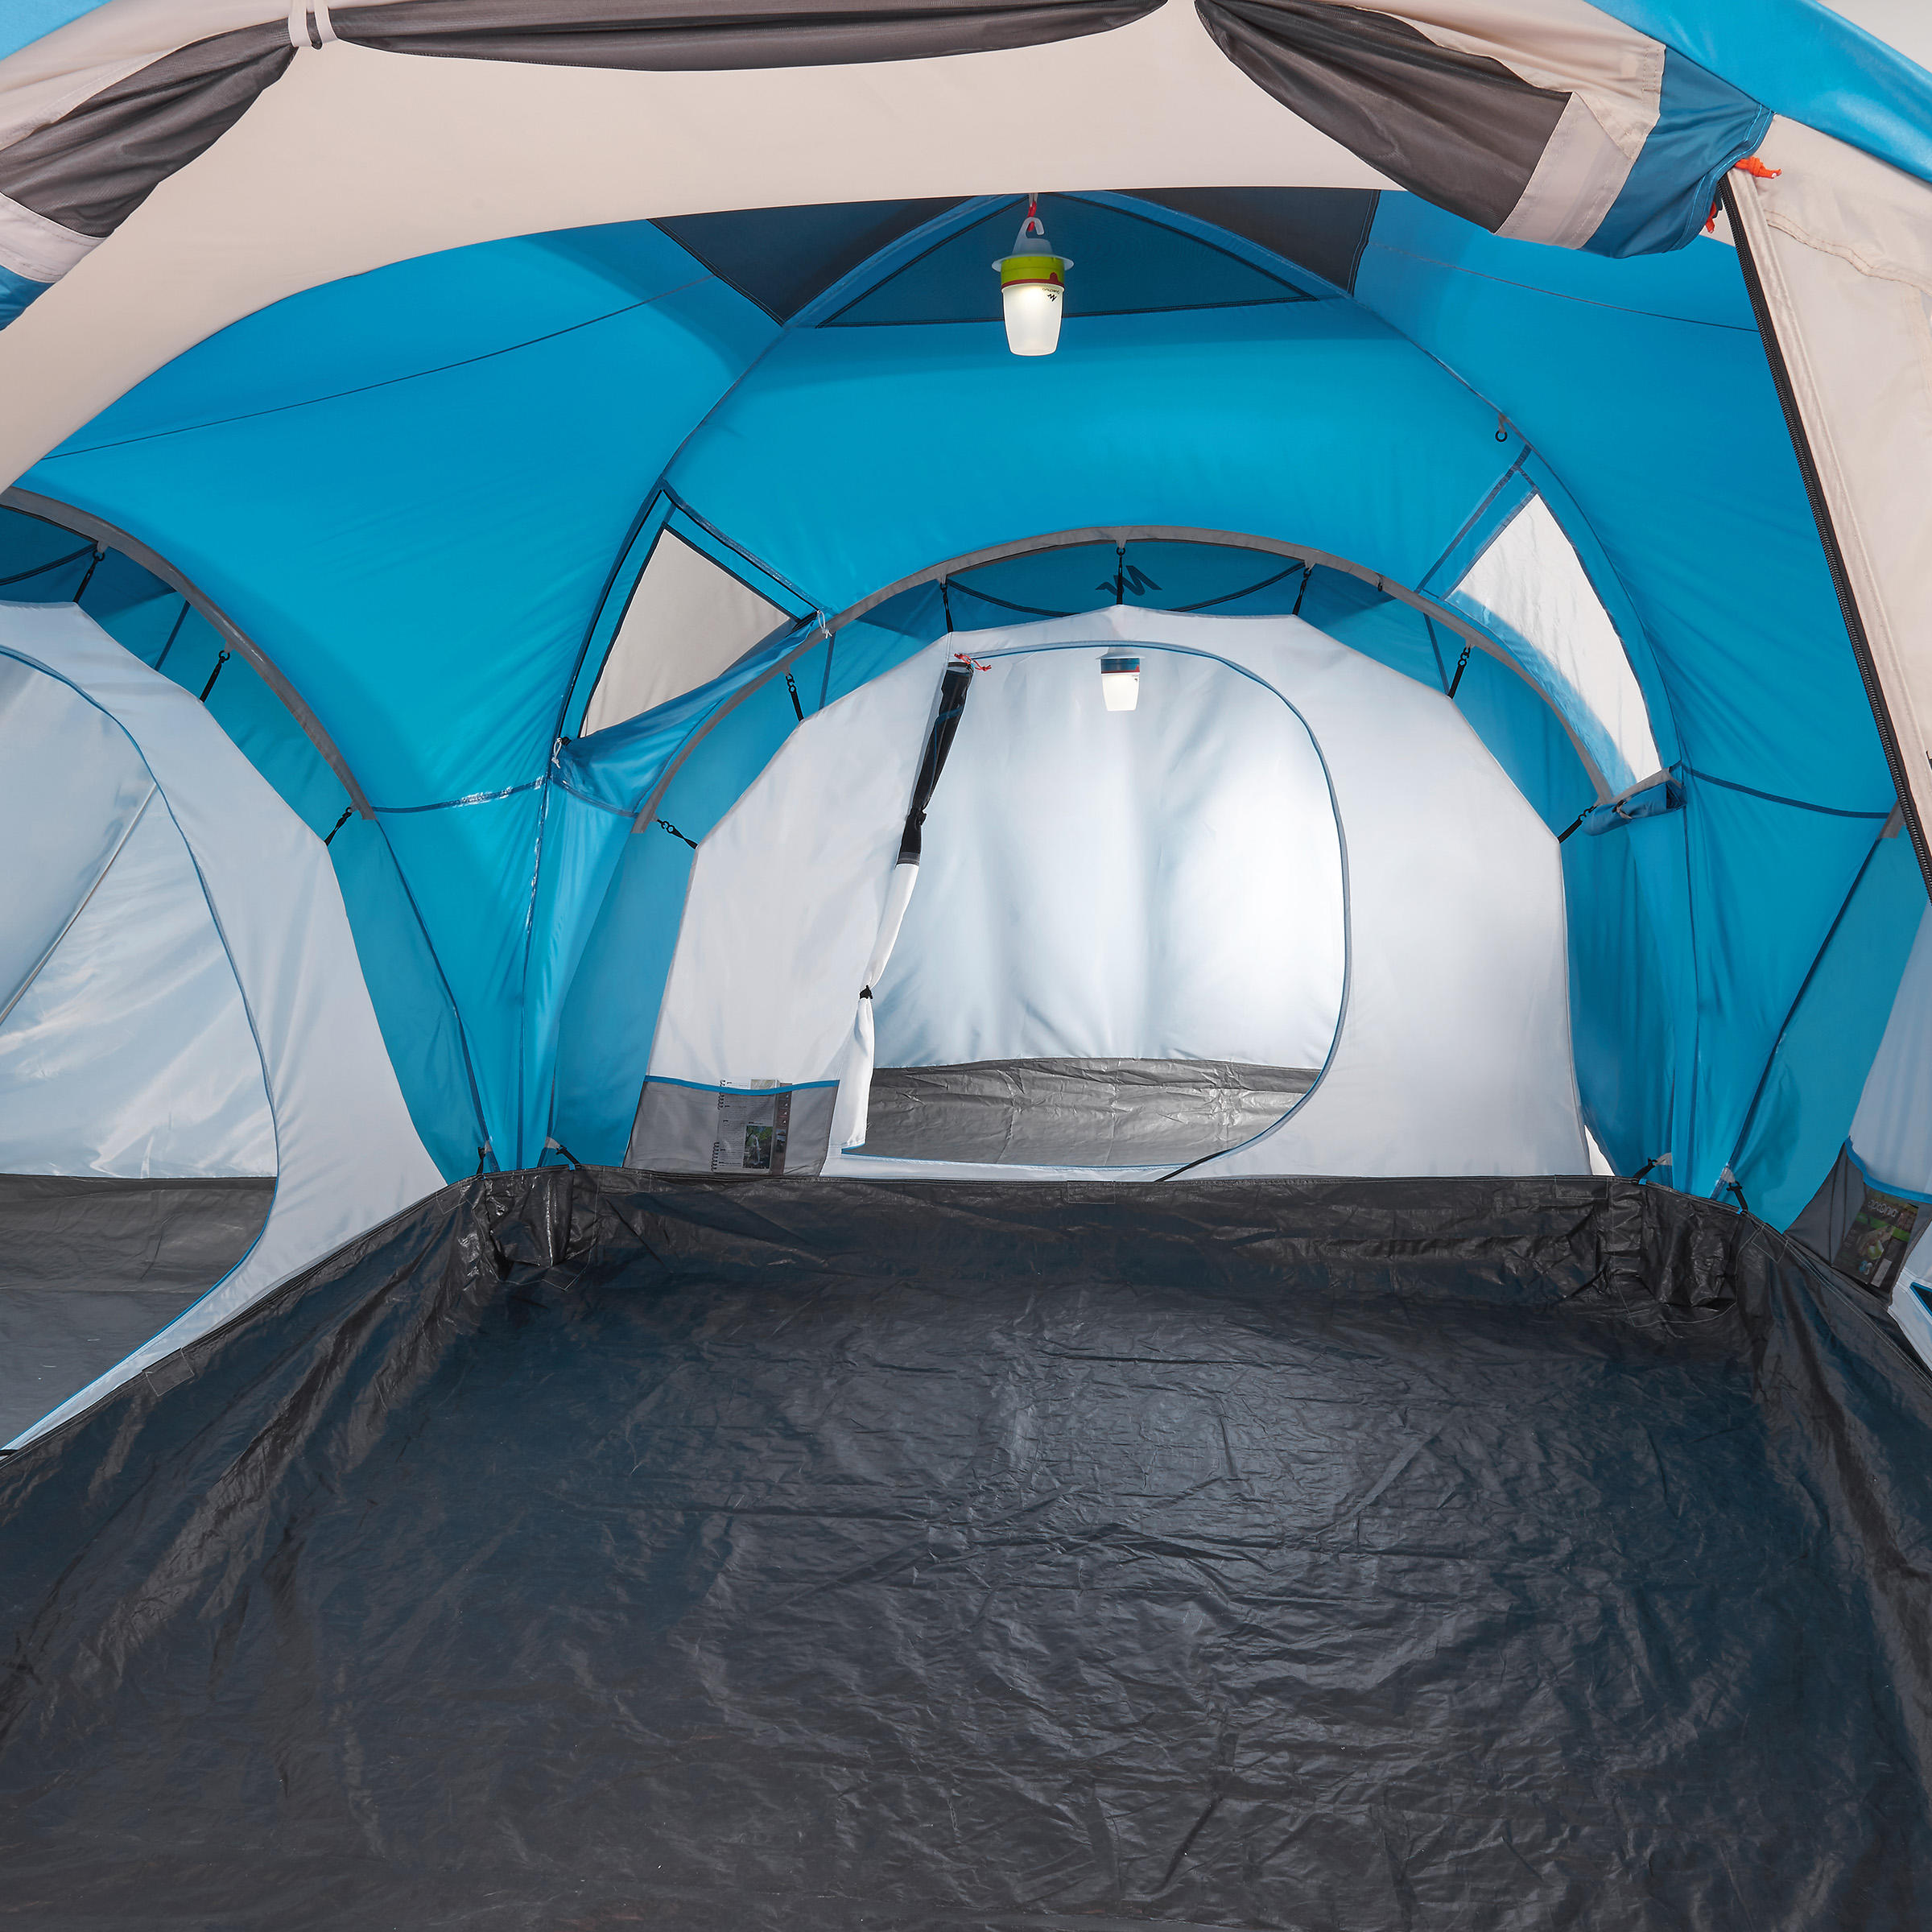 decathlon 6 man tent